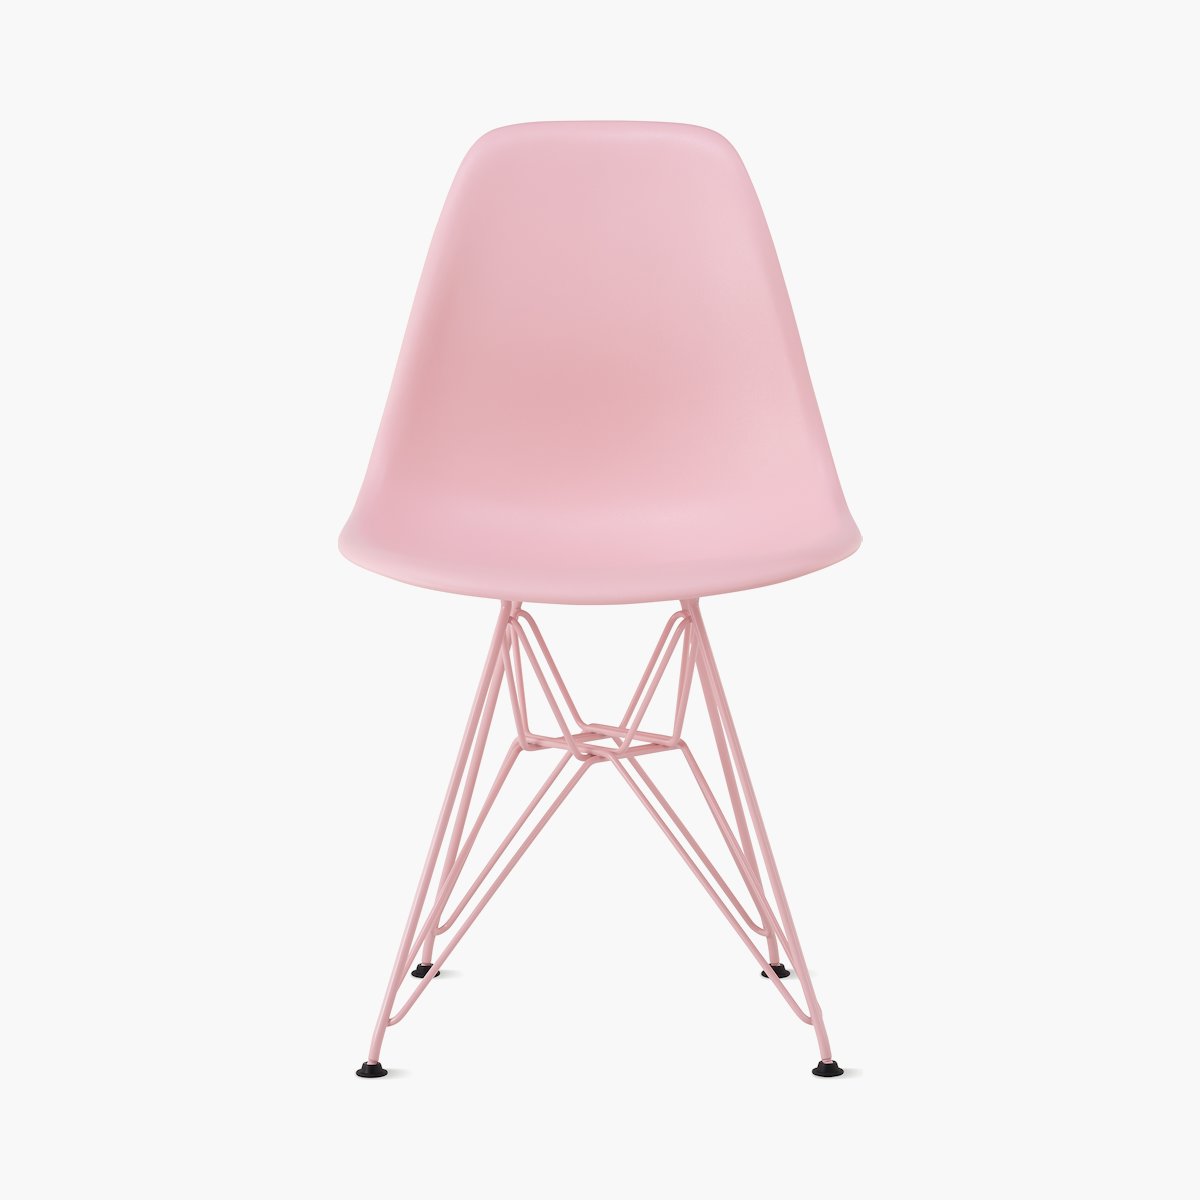 Eames Molded Plastic Side Chair, Herman Miller x HAY